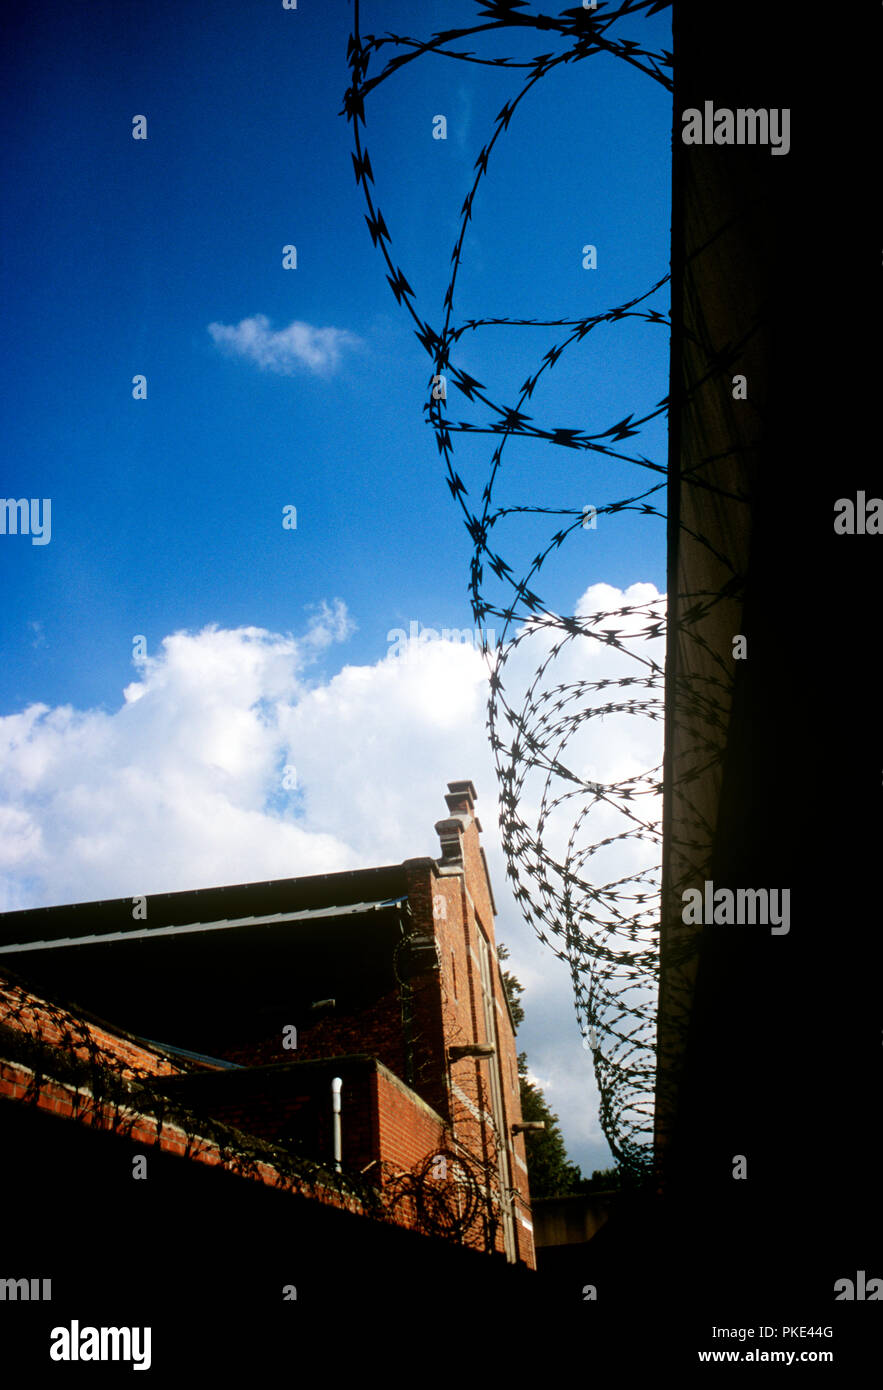 Im ehemaligen Gefängnis von Tongeren (Belgien, 10/09/2006) Stockfoto